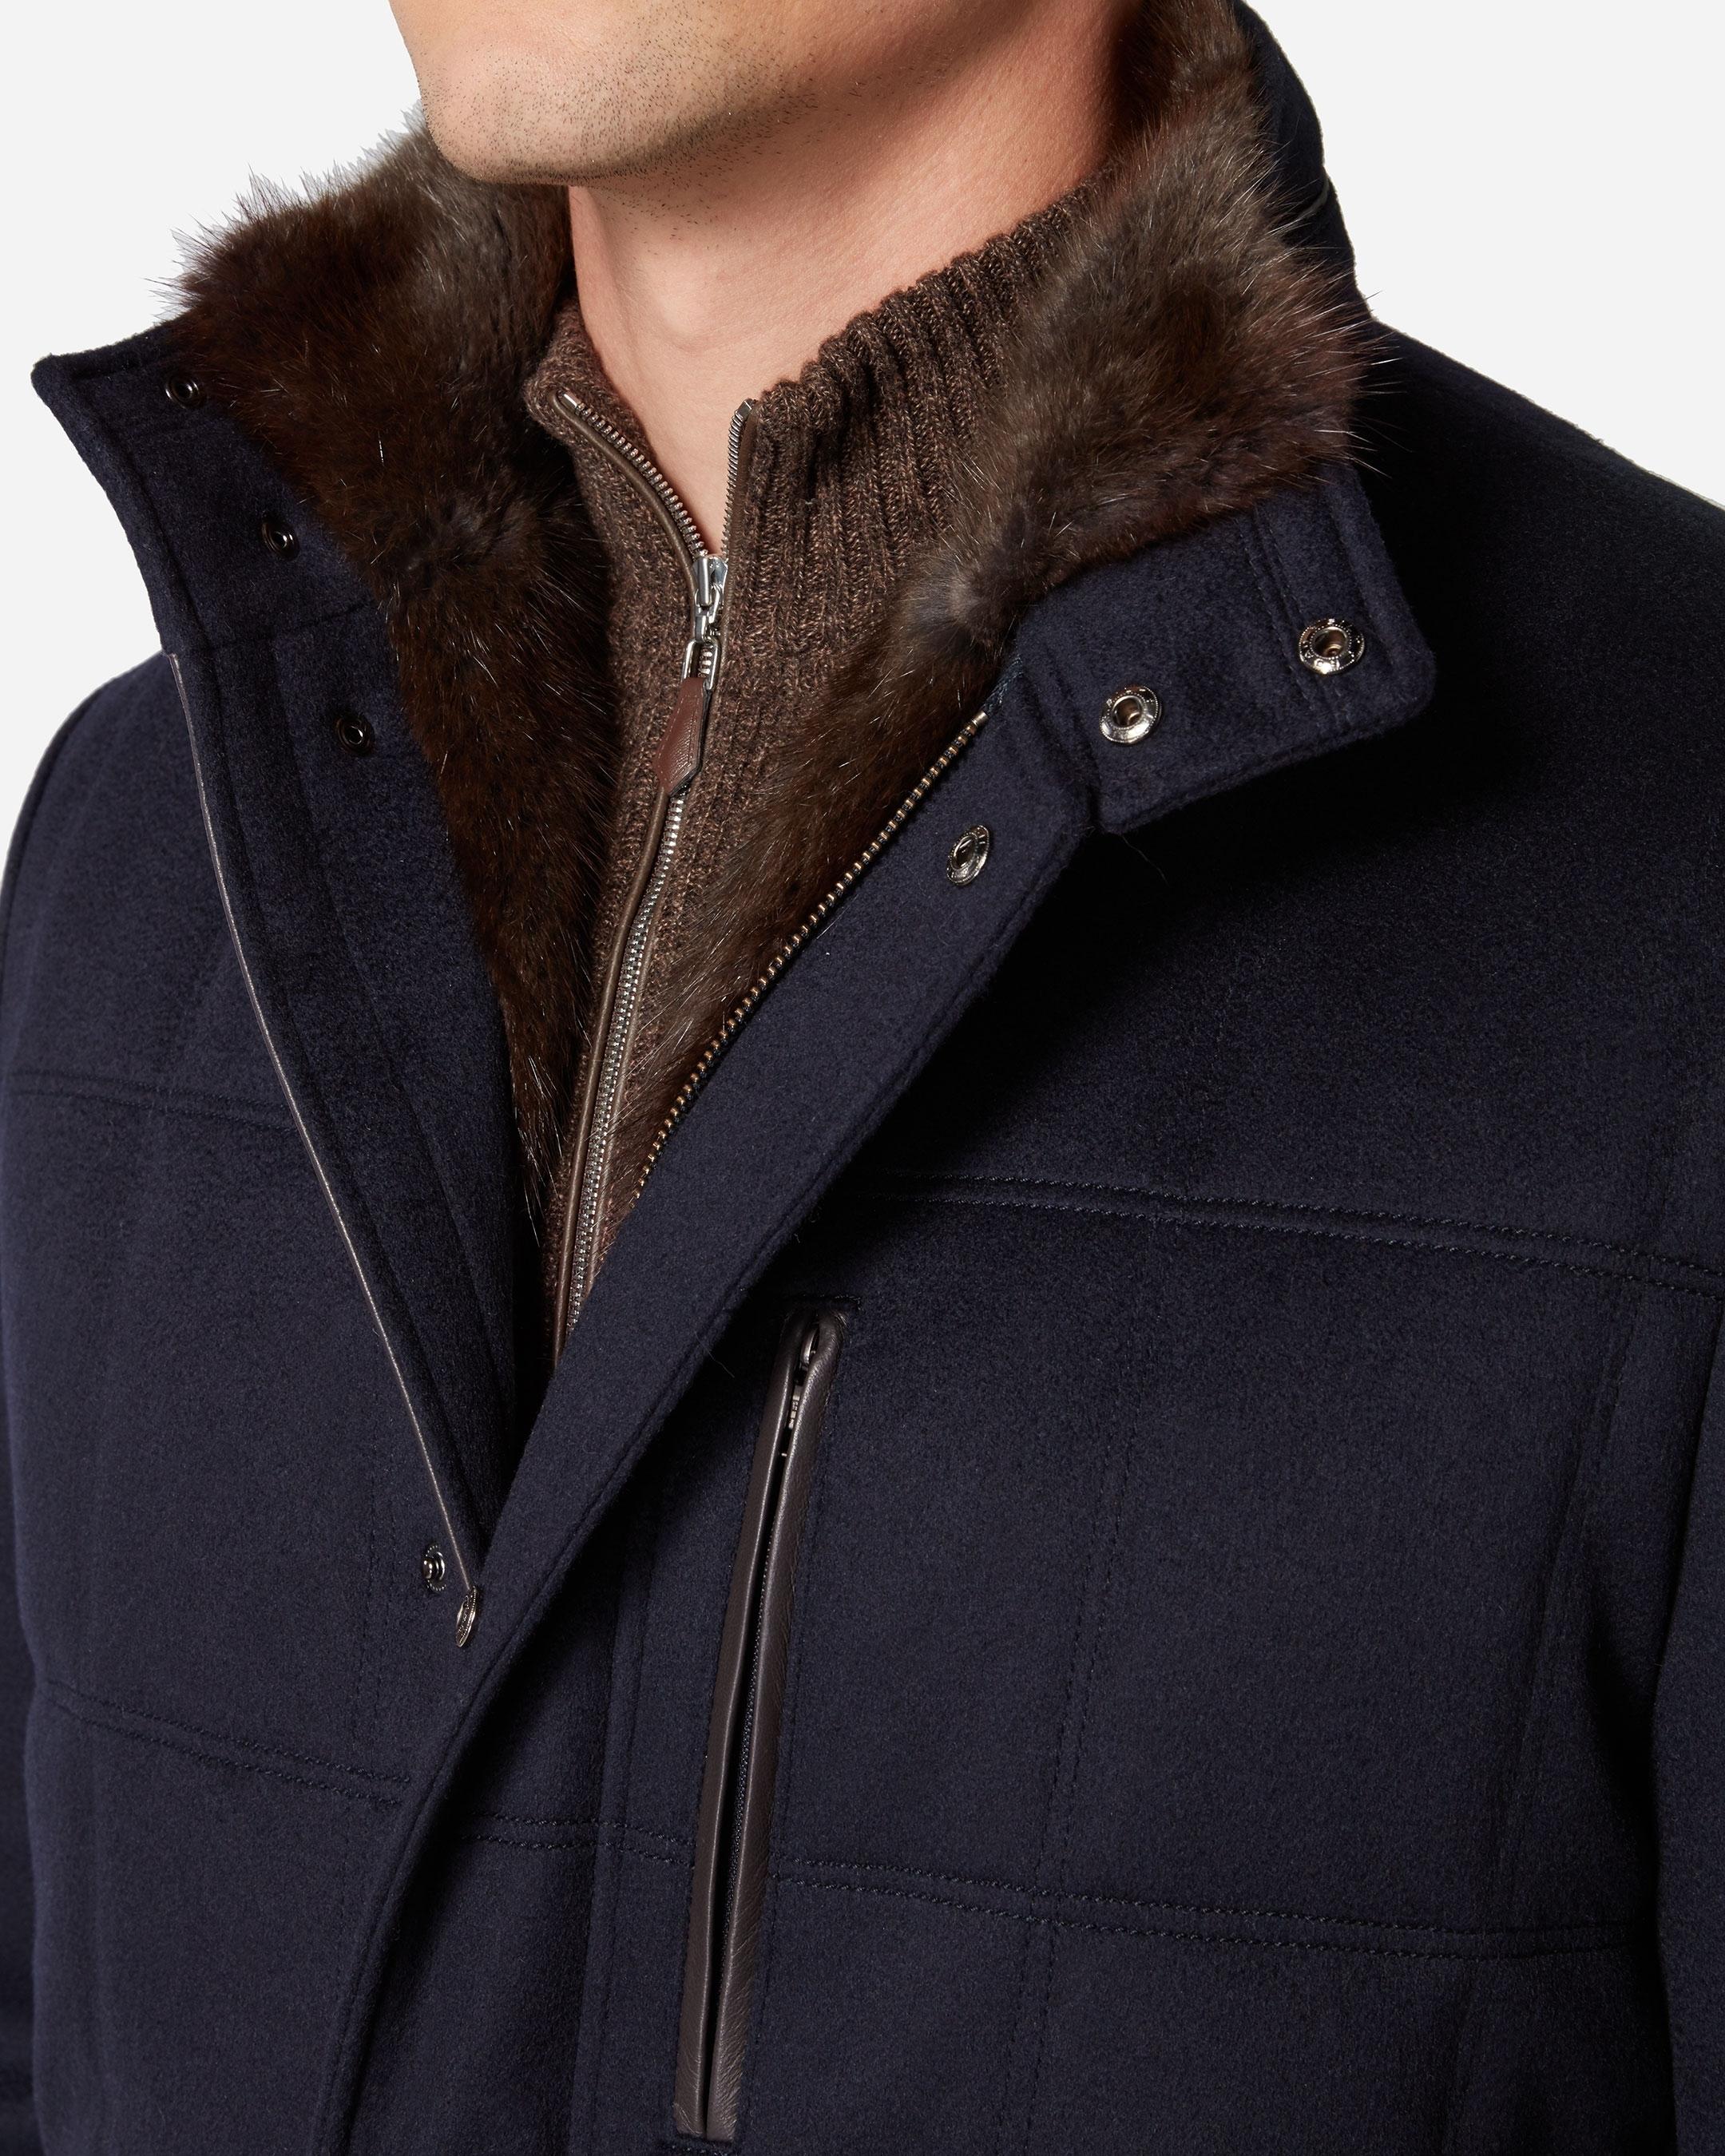 N.Peal Cashmere Fur Lined Coat in Blue for Men - Lyst